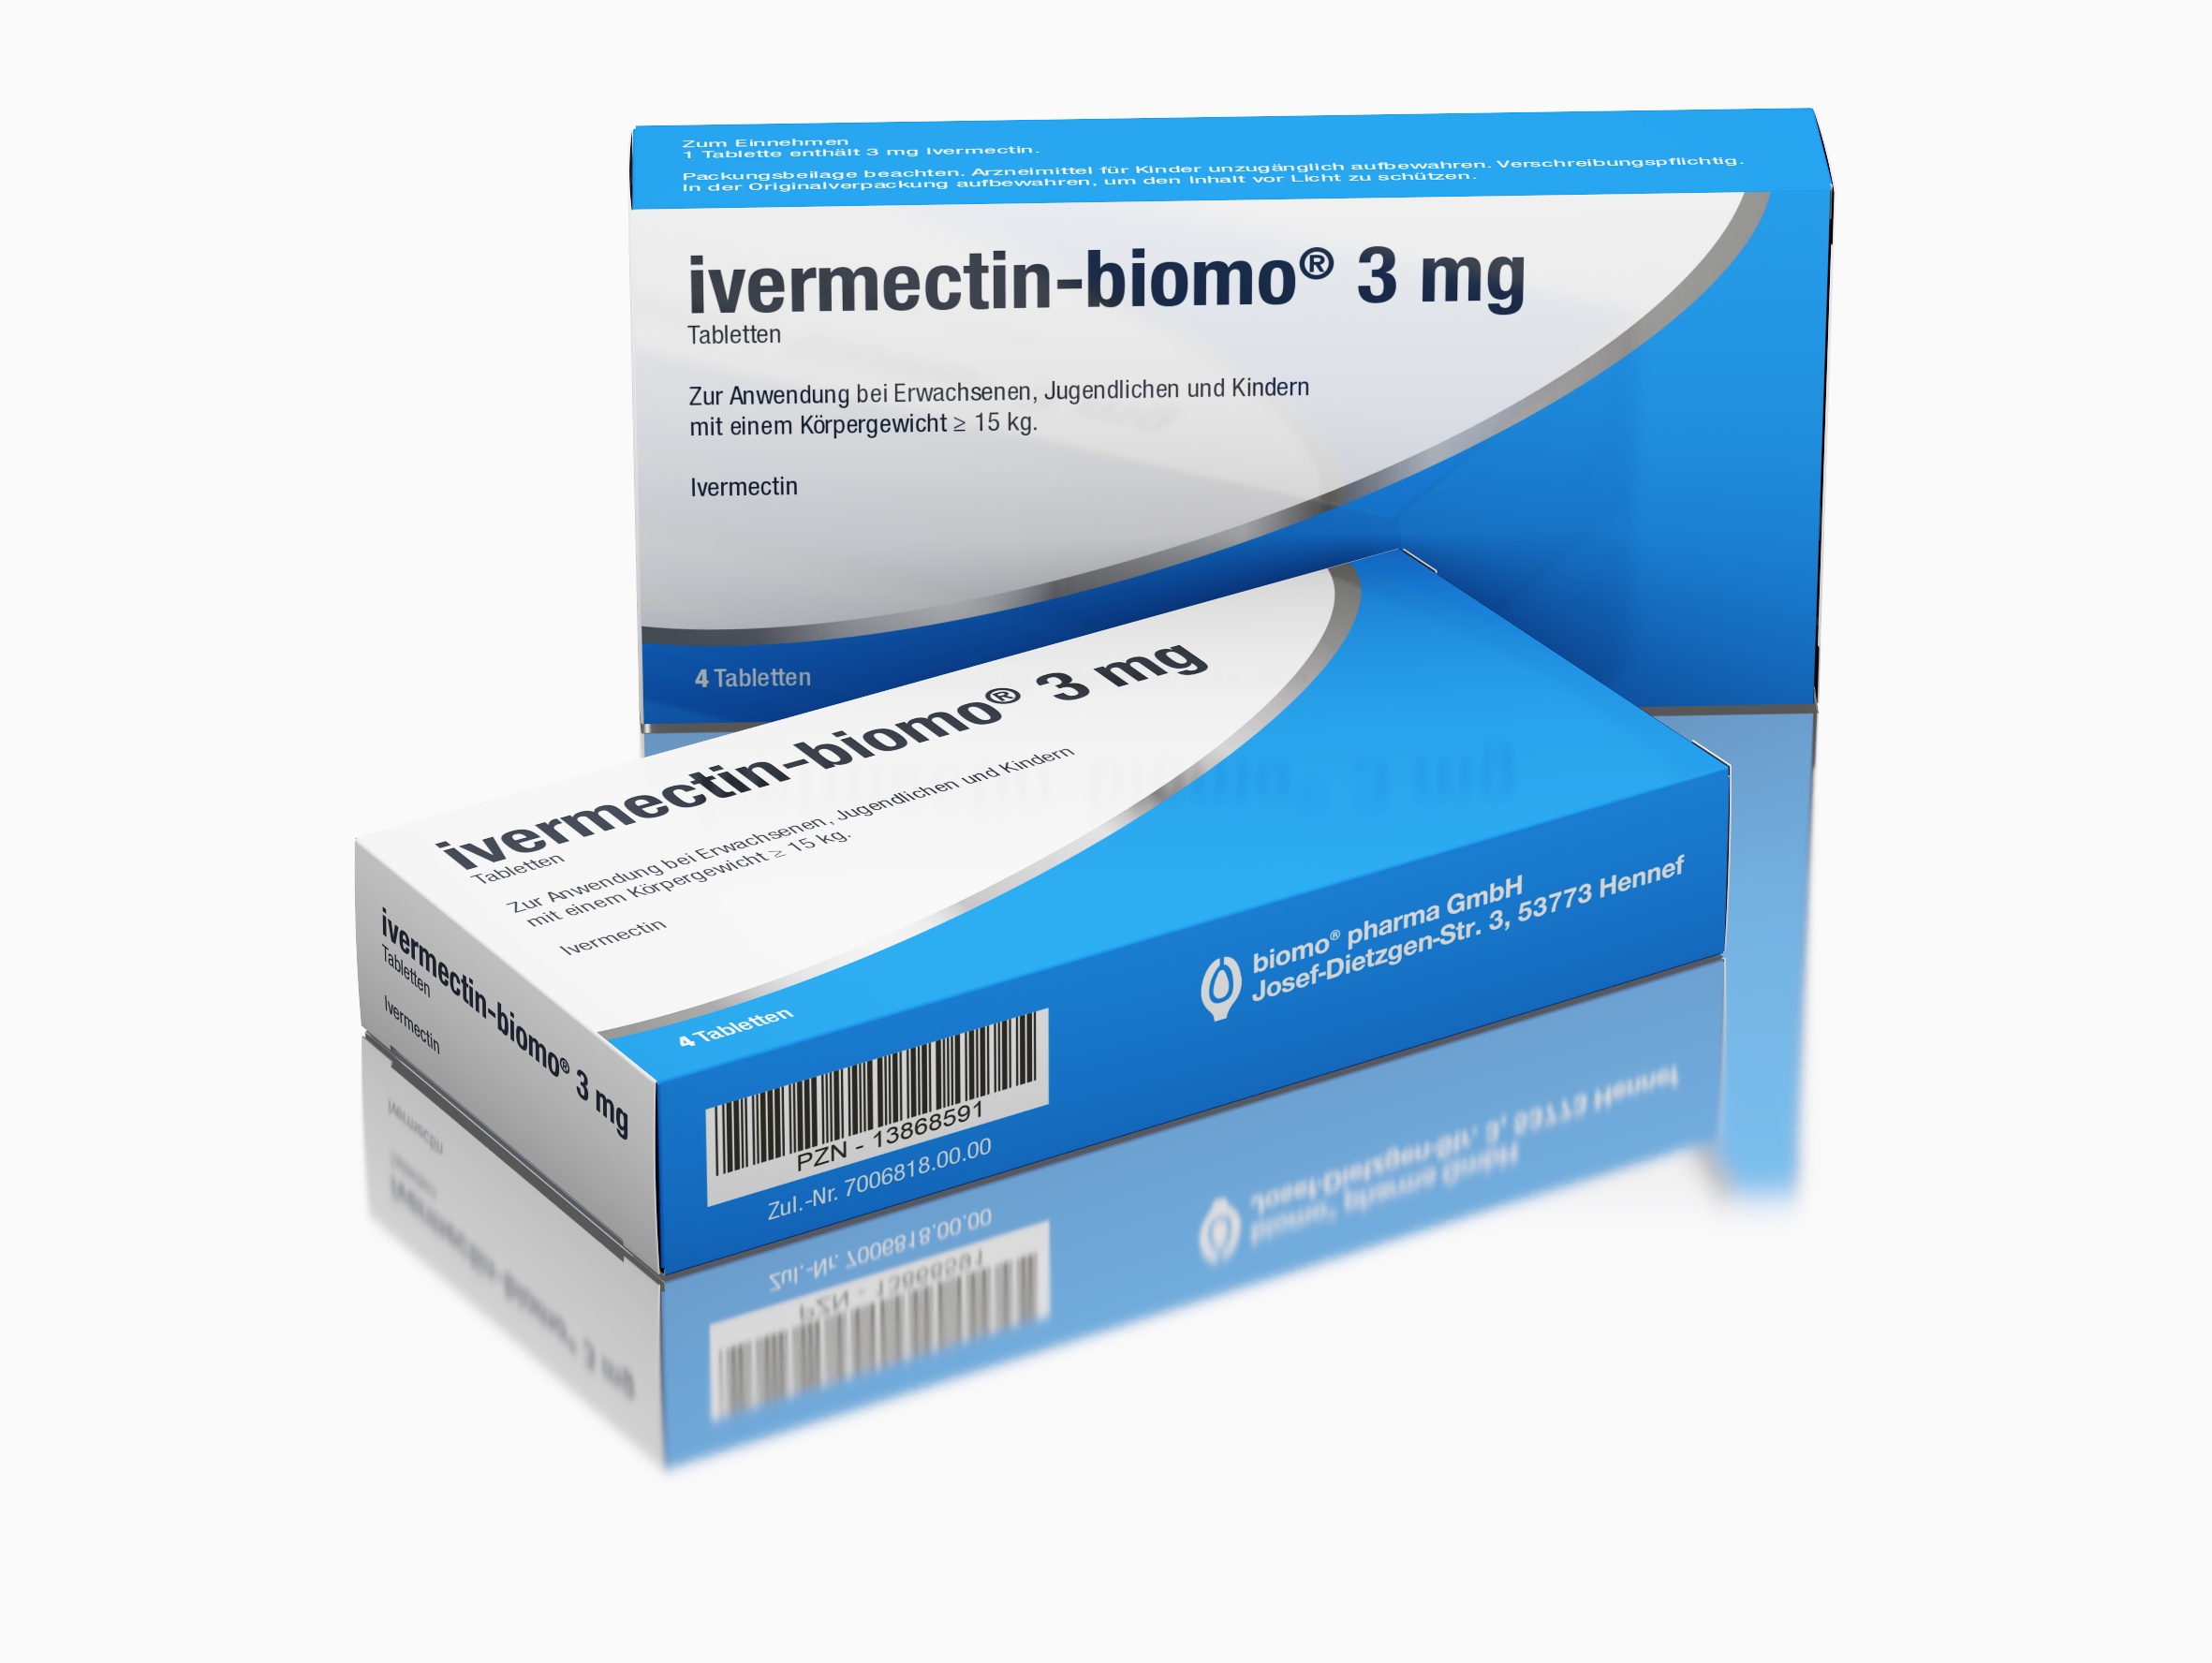 https://www.apotheke-adhoc.de/fileadmin/user_upload/vertrieb/biomo_pharma_GmbH/Branchennews/2022-09-23-biomo_pharma_erweitert_sein_Scabies-Portfolio/ivermectin-4.jpg